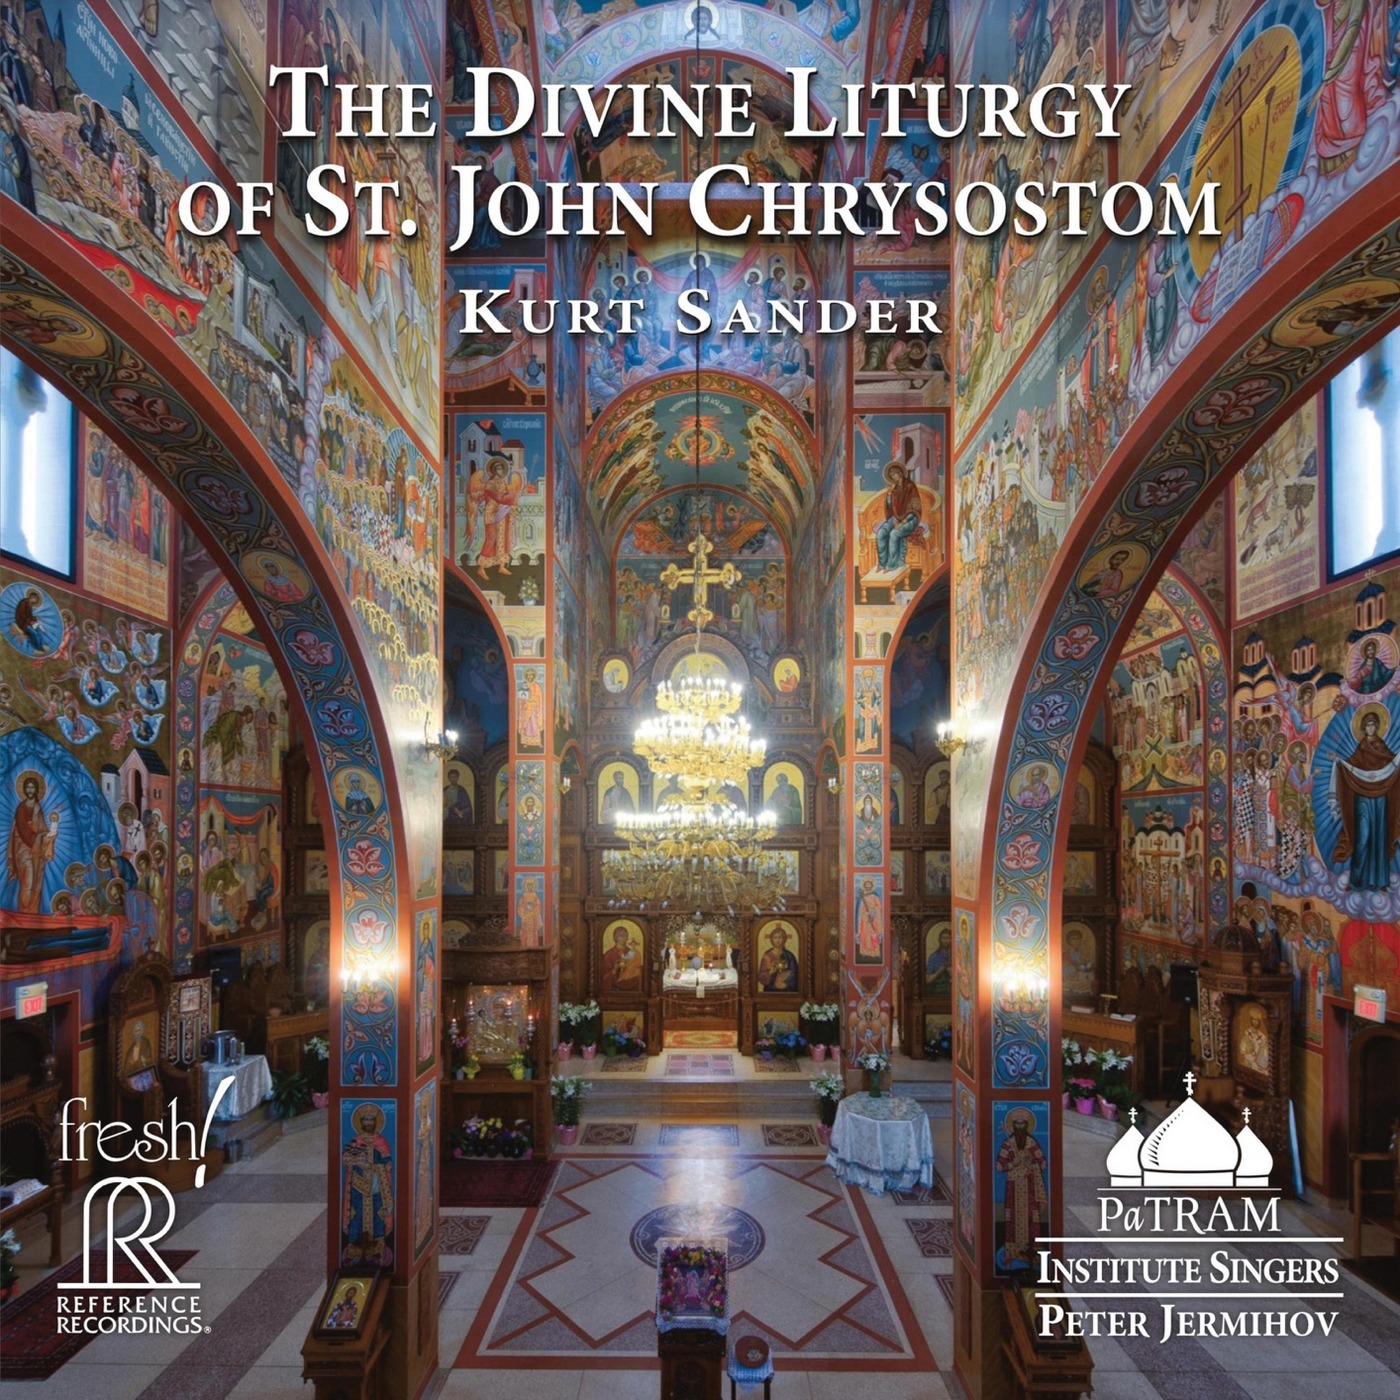 PaTRAM Institute Singers & Peter Jermihov – Kurt Sander: The Divine Liturgy of St. John Chrysostom (2019) [FLAC 24bit/192kHz]